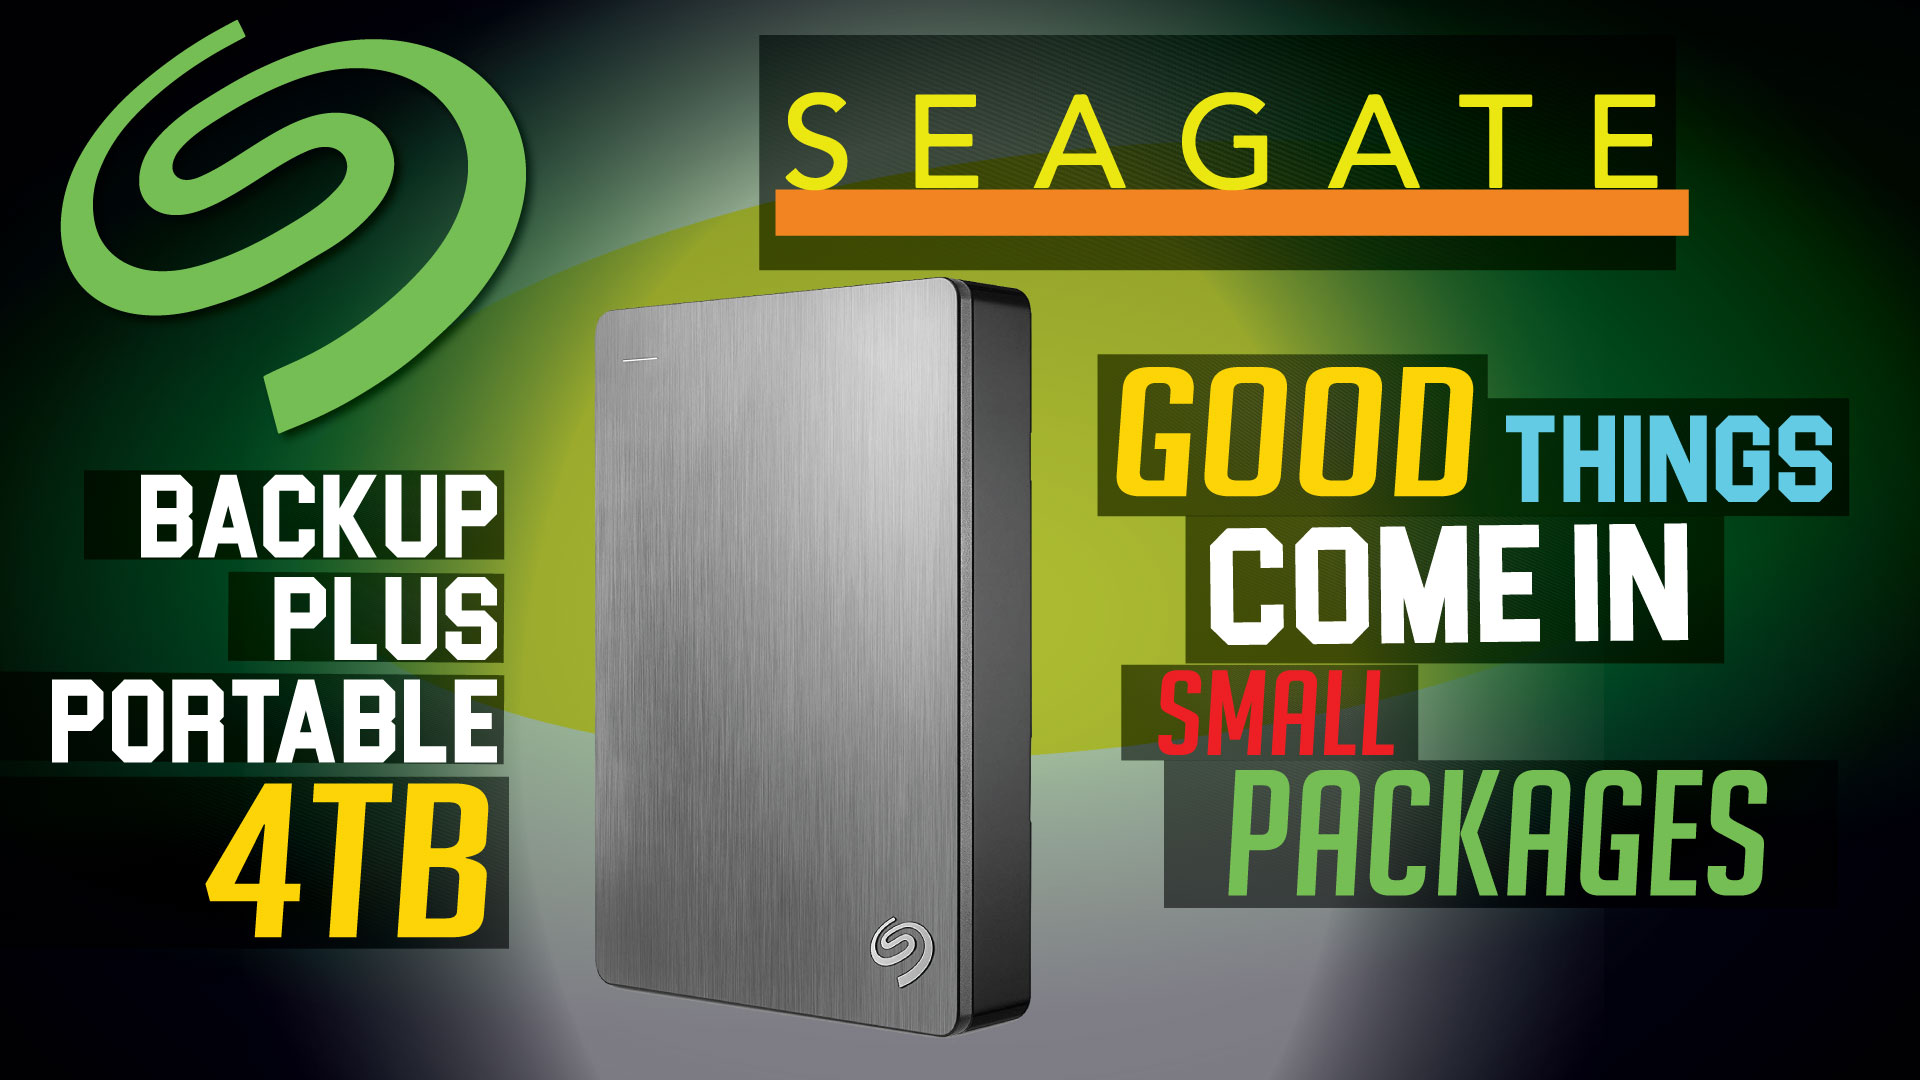 seagate 4tb backup plus portable storage installation